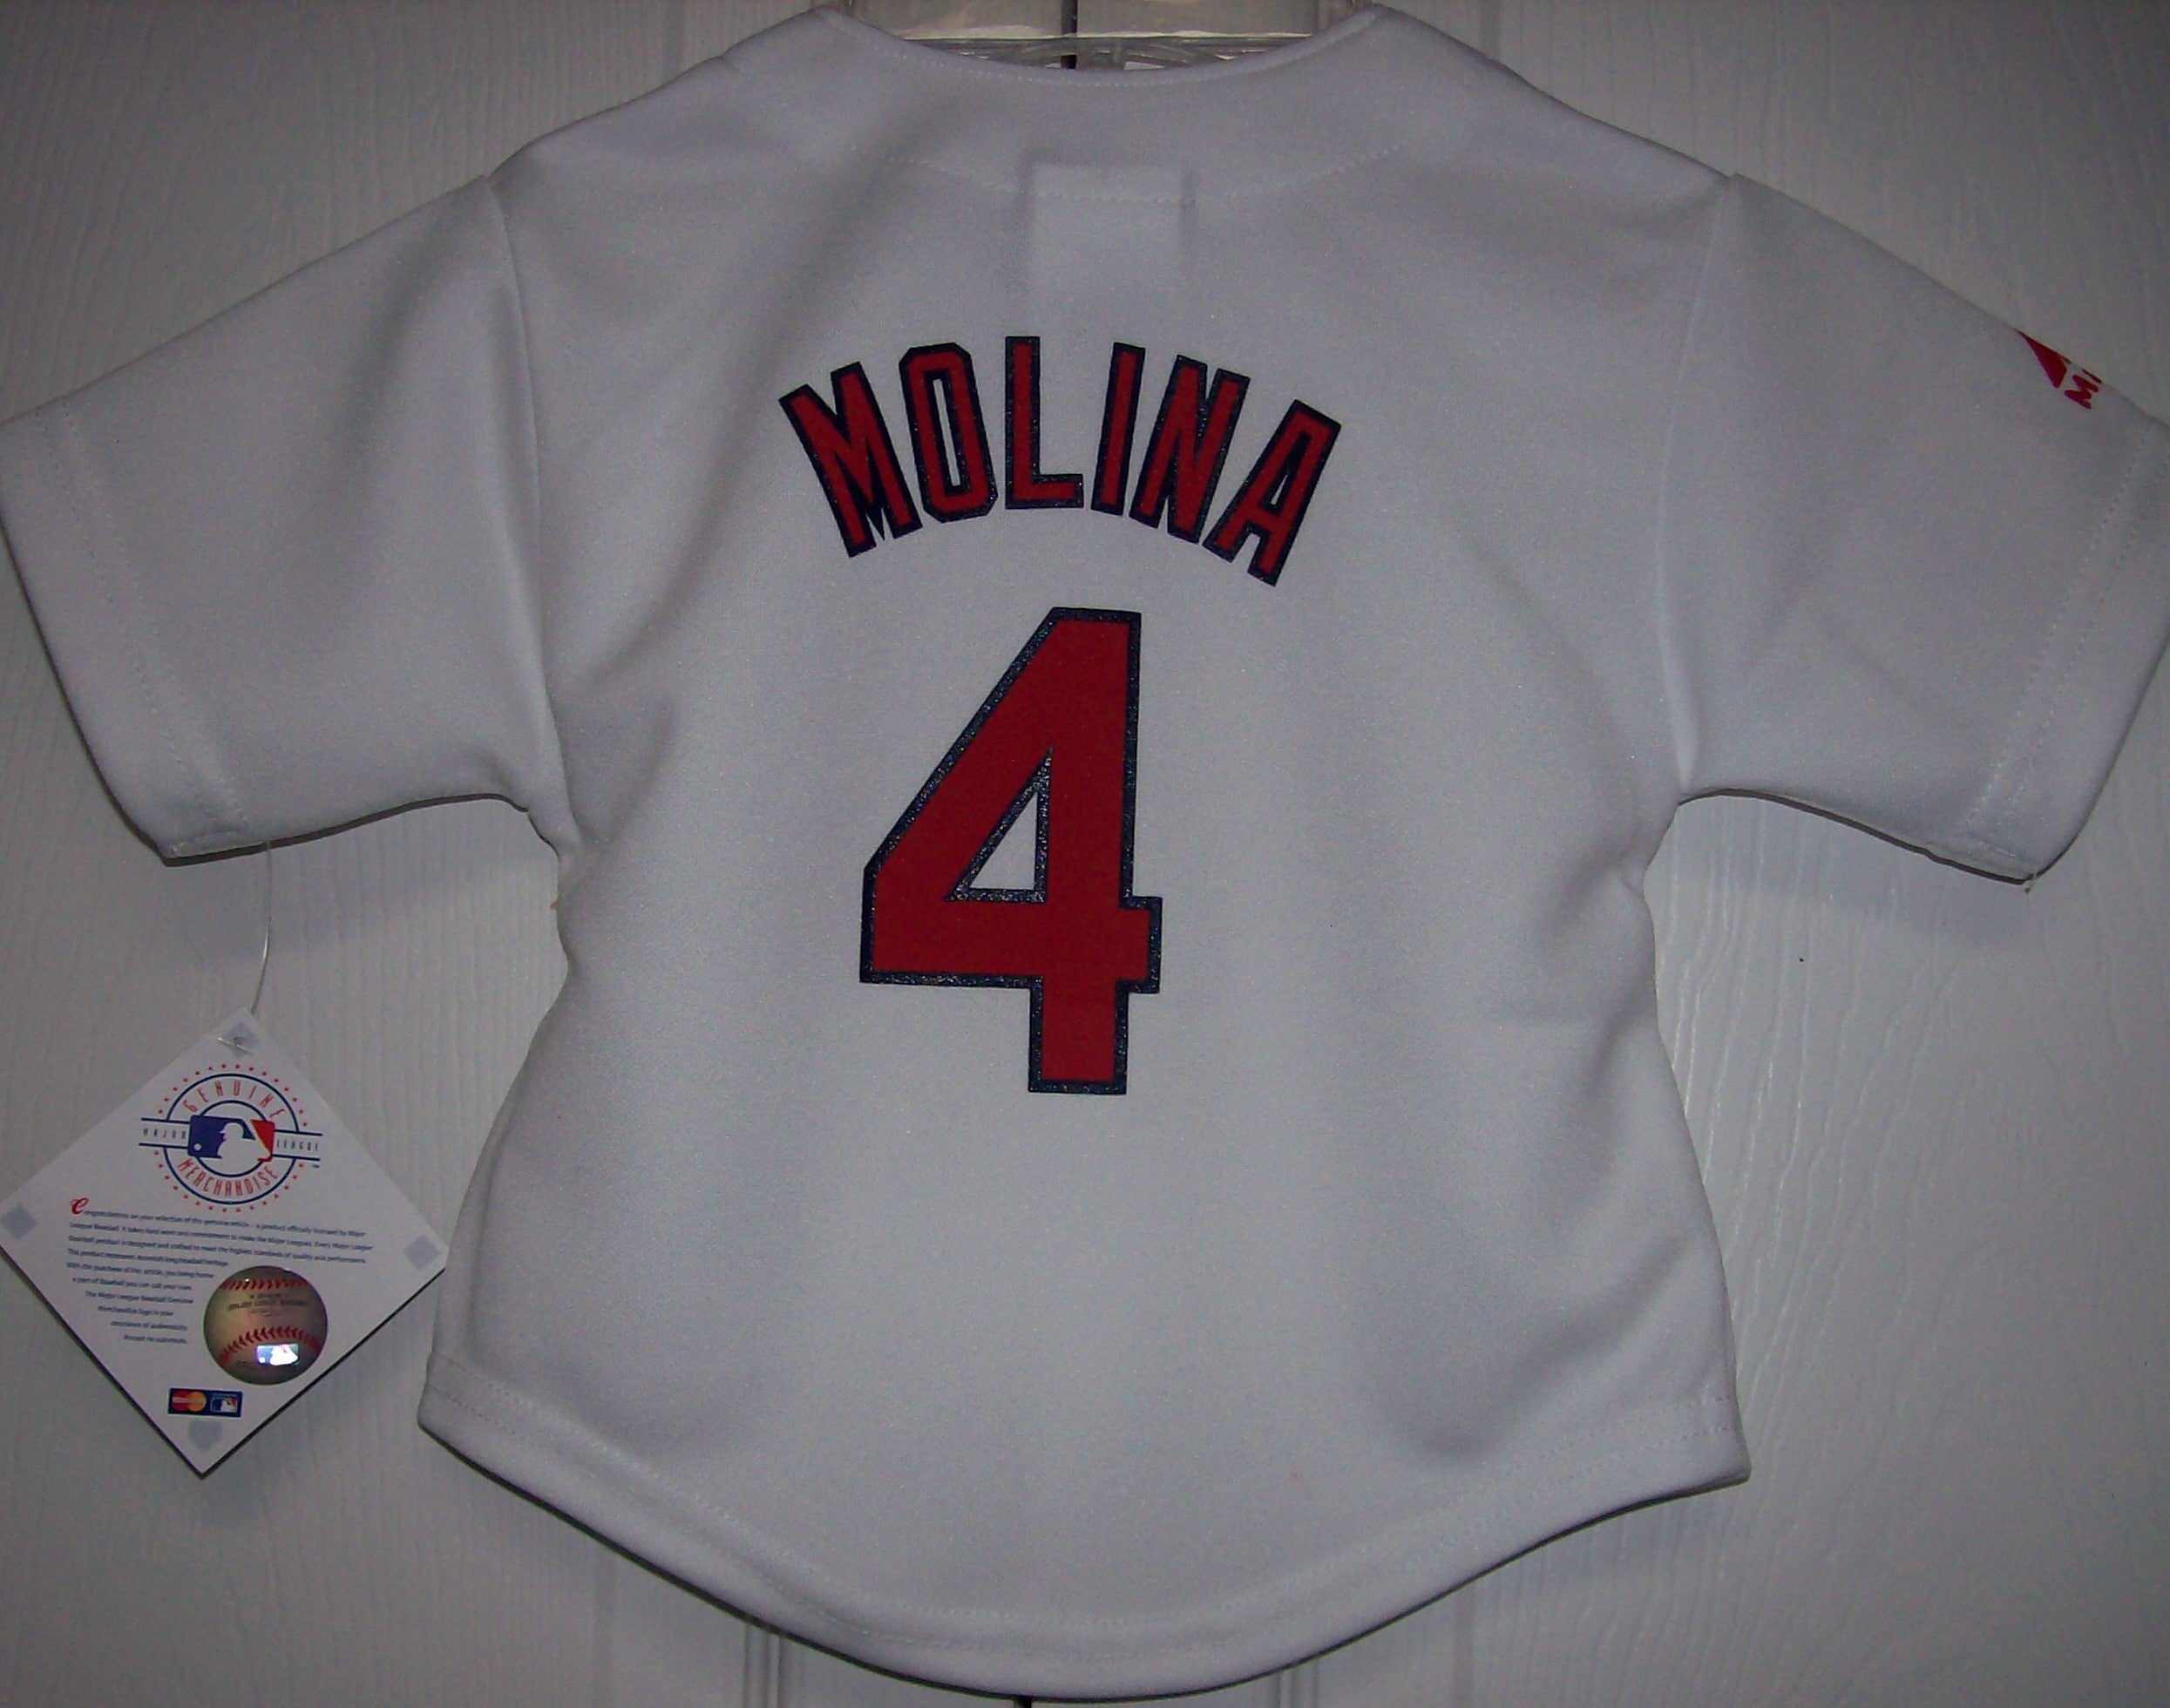 MLB St. Louis Cardinals (Yadier Molina) Men's Replica Baseball Jersey